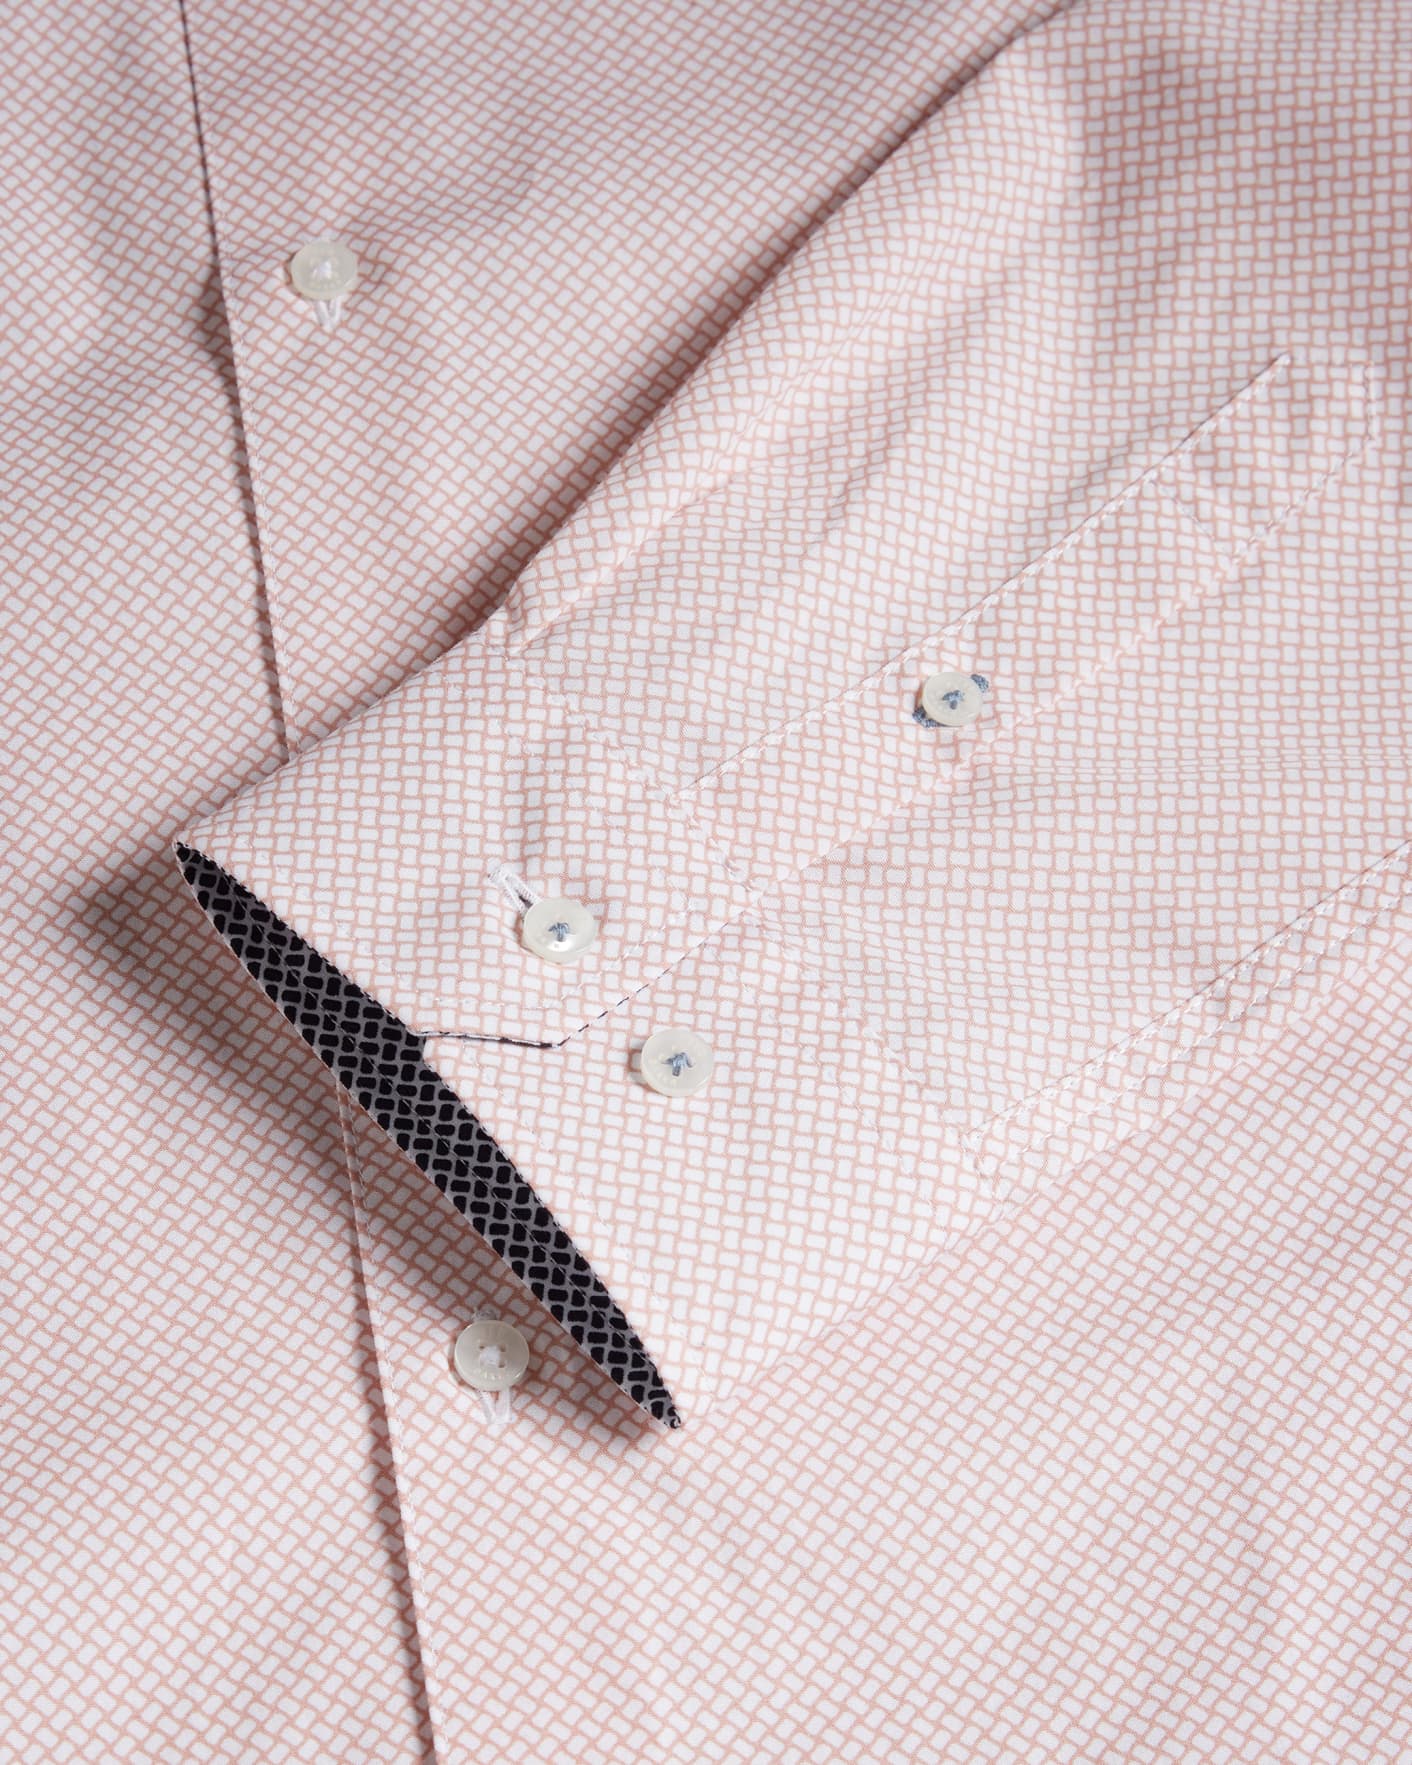 Pink Long Sleeve Slim Fit Shirt Ted Baker